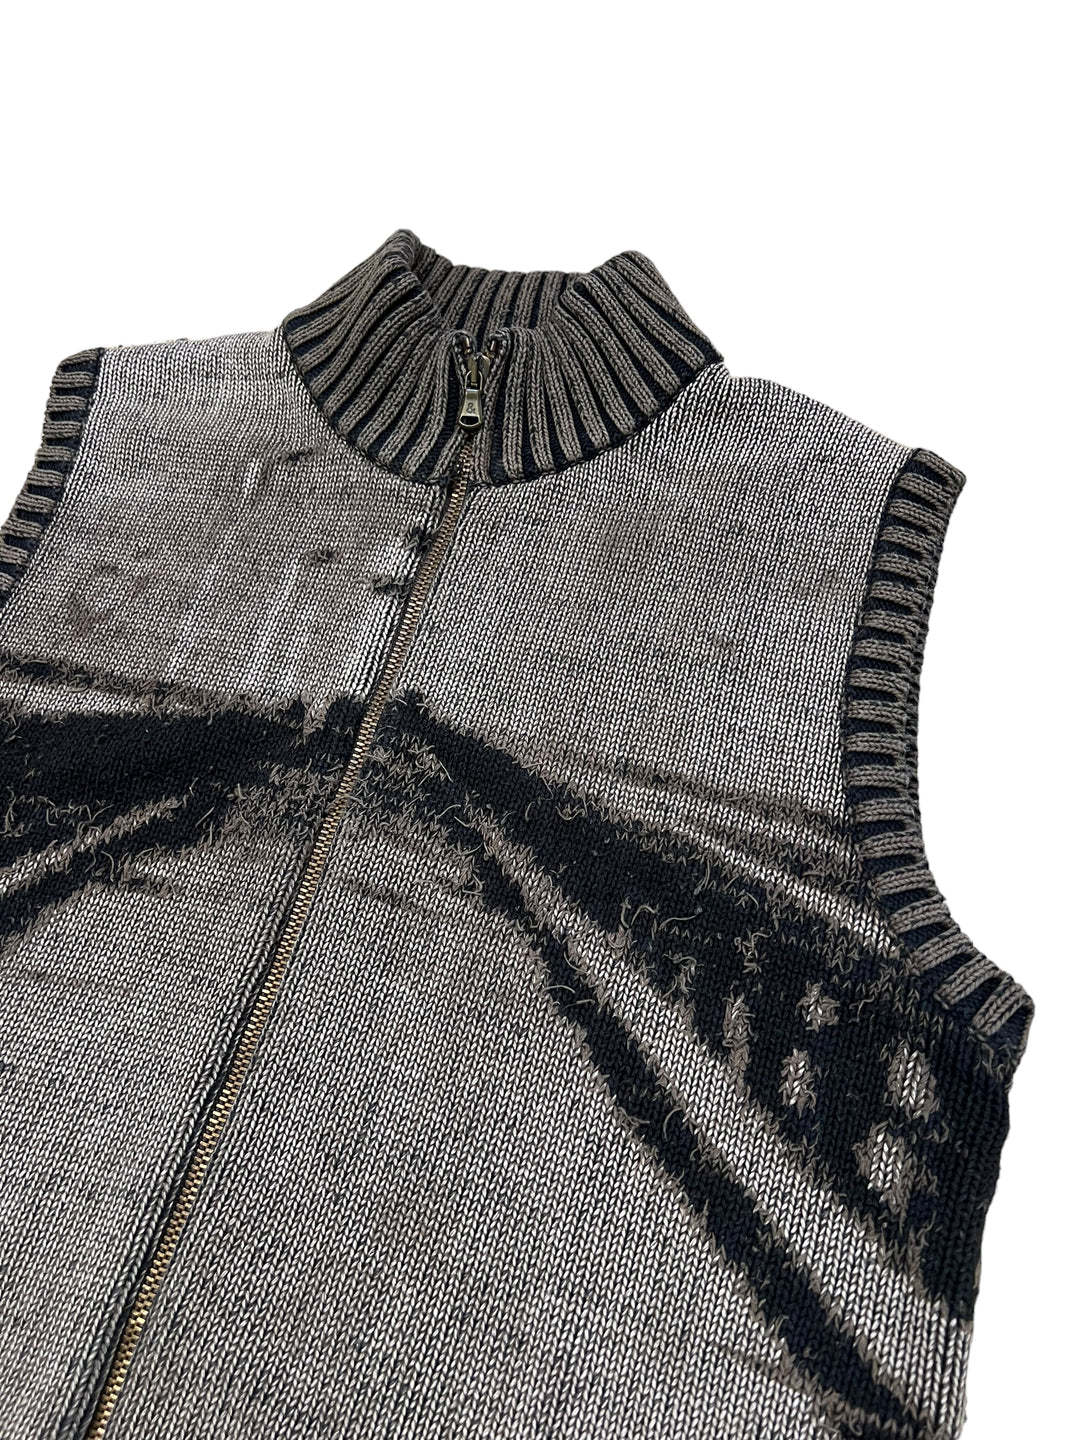 Dolce & Gabbana Vintage Knit Vest Jacket Women’s Medium